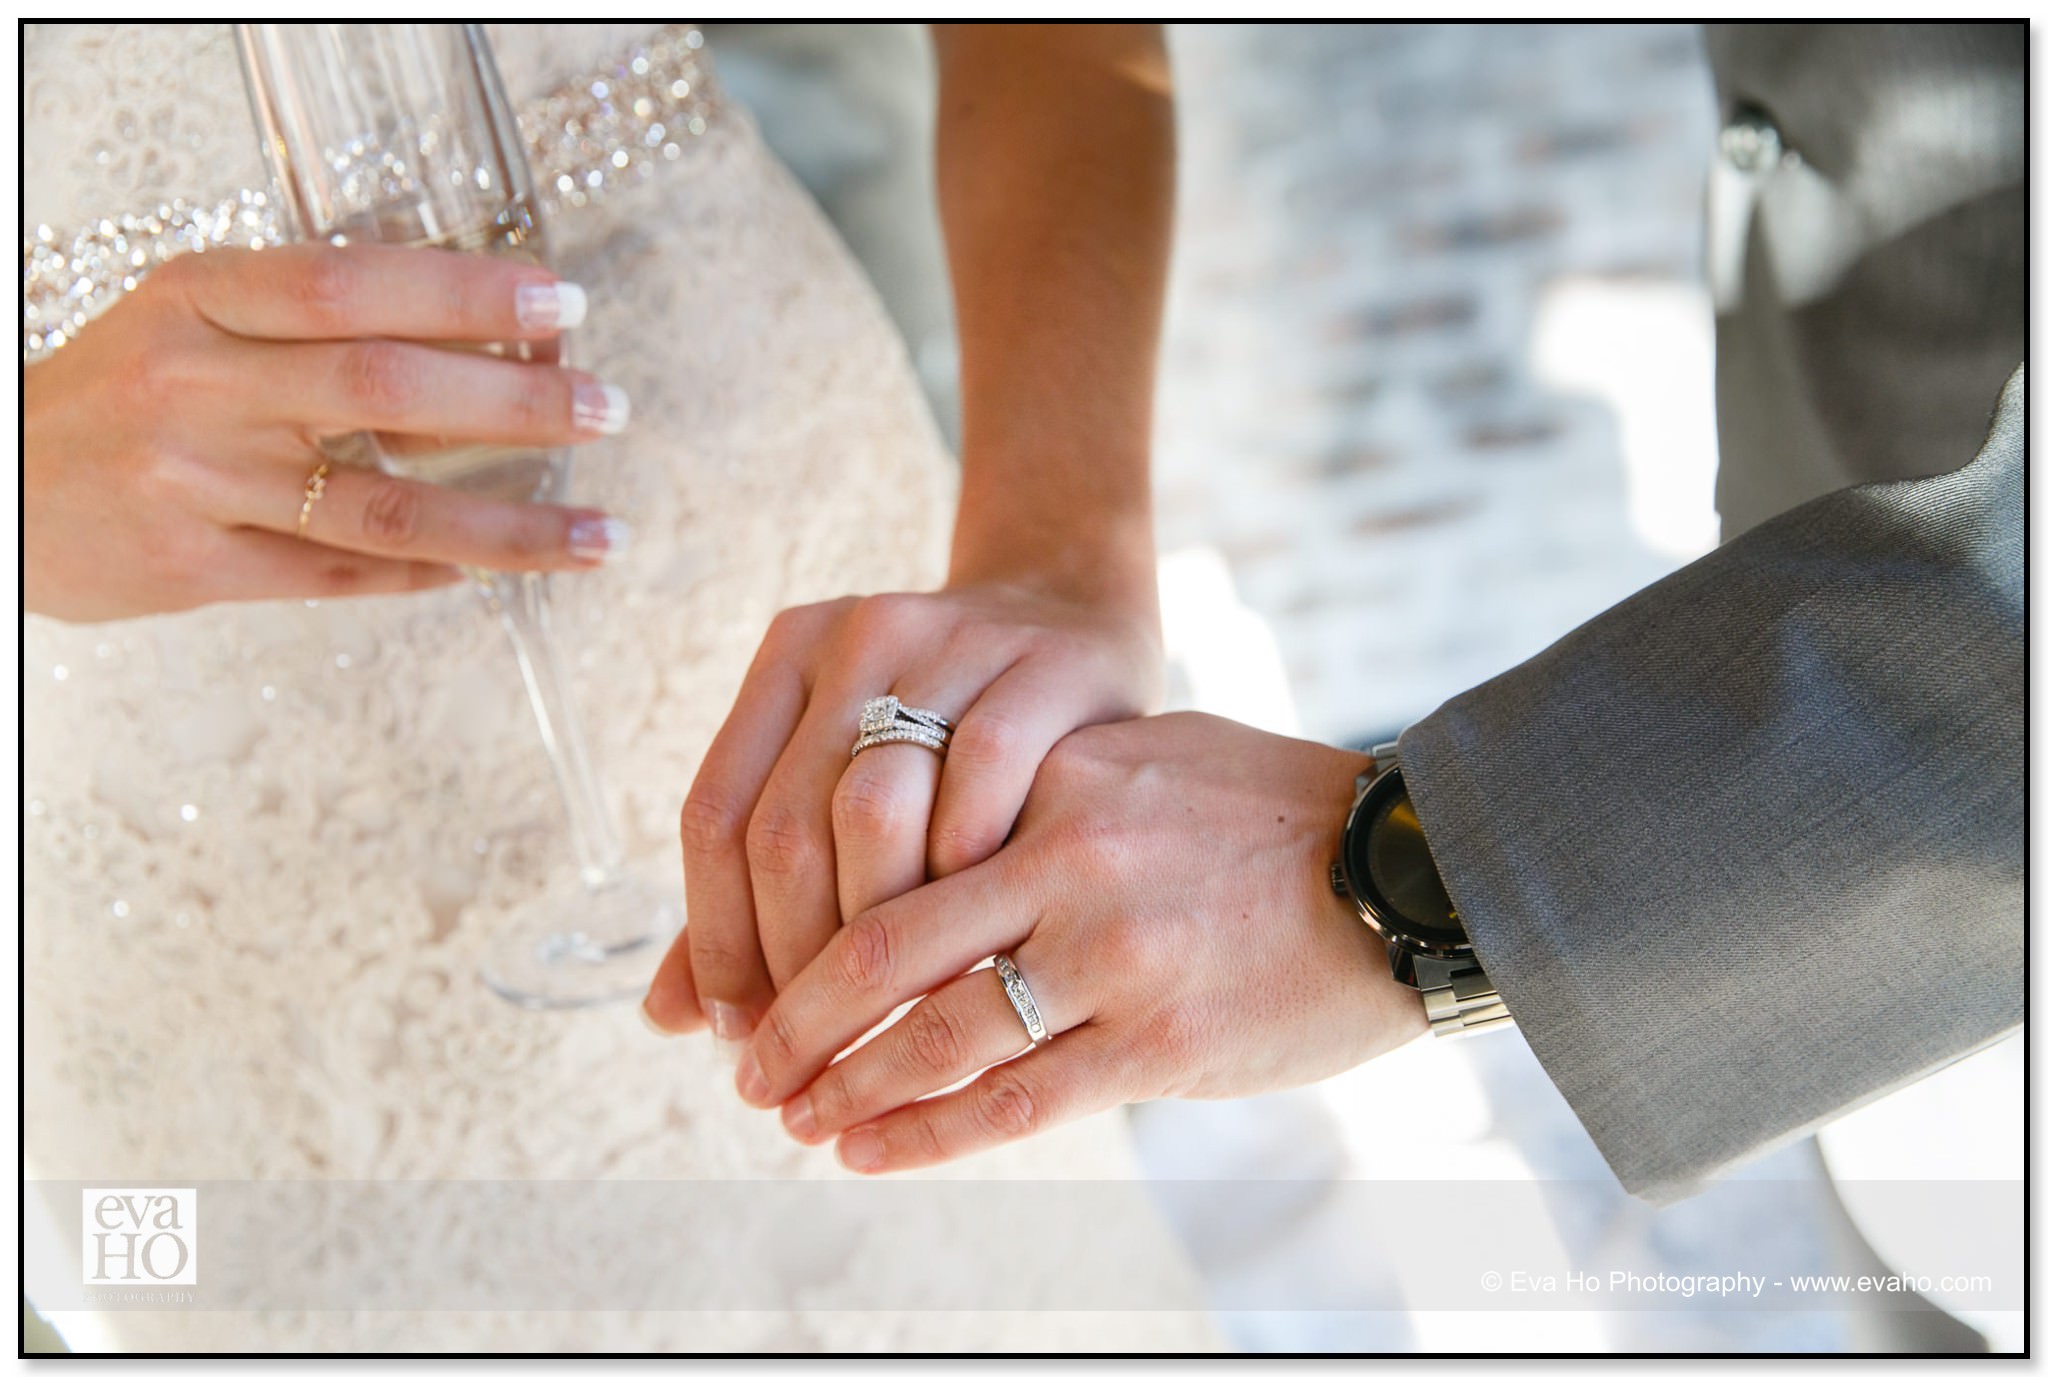 Lesbian wedding planning advice and tips - Same-sex LGBTQ+ weddings